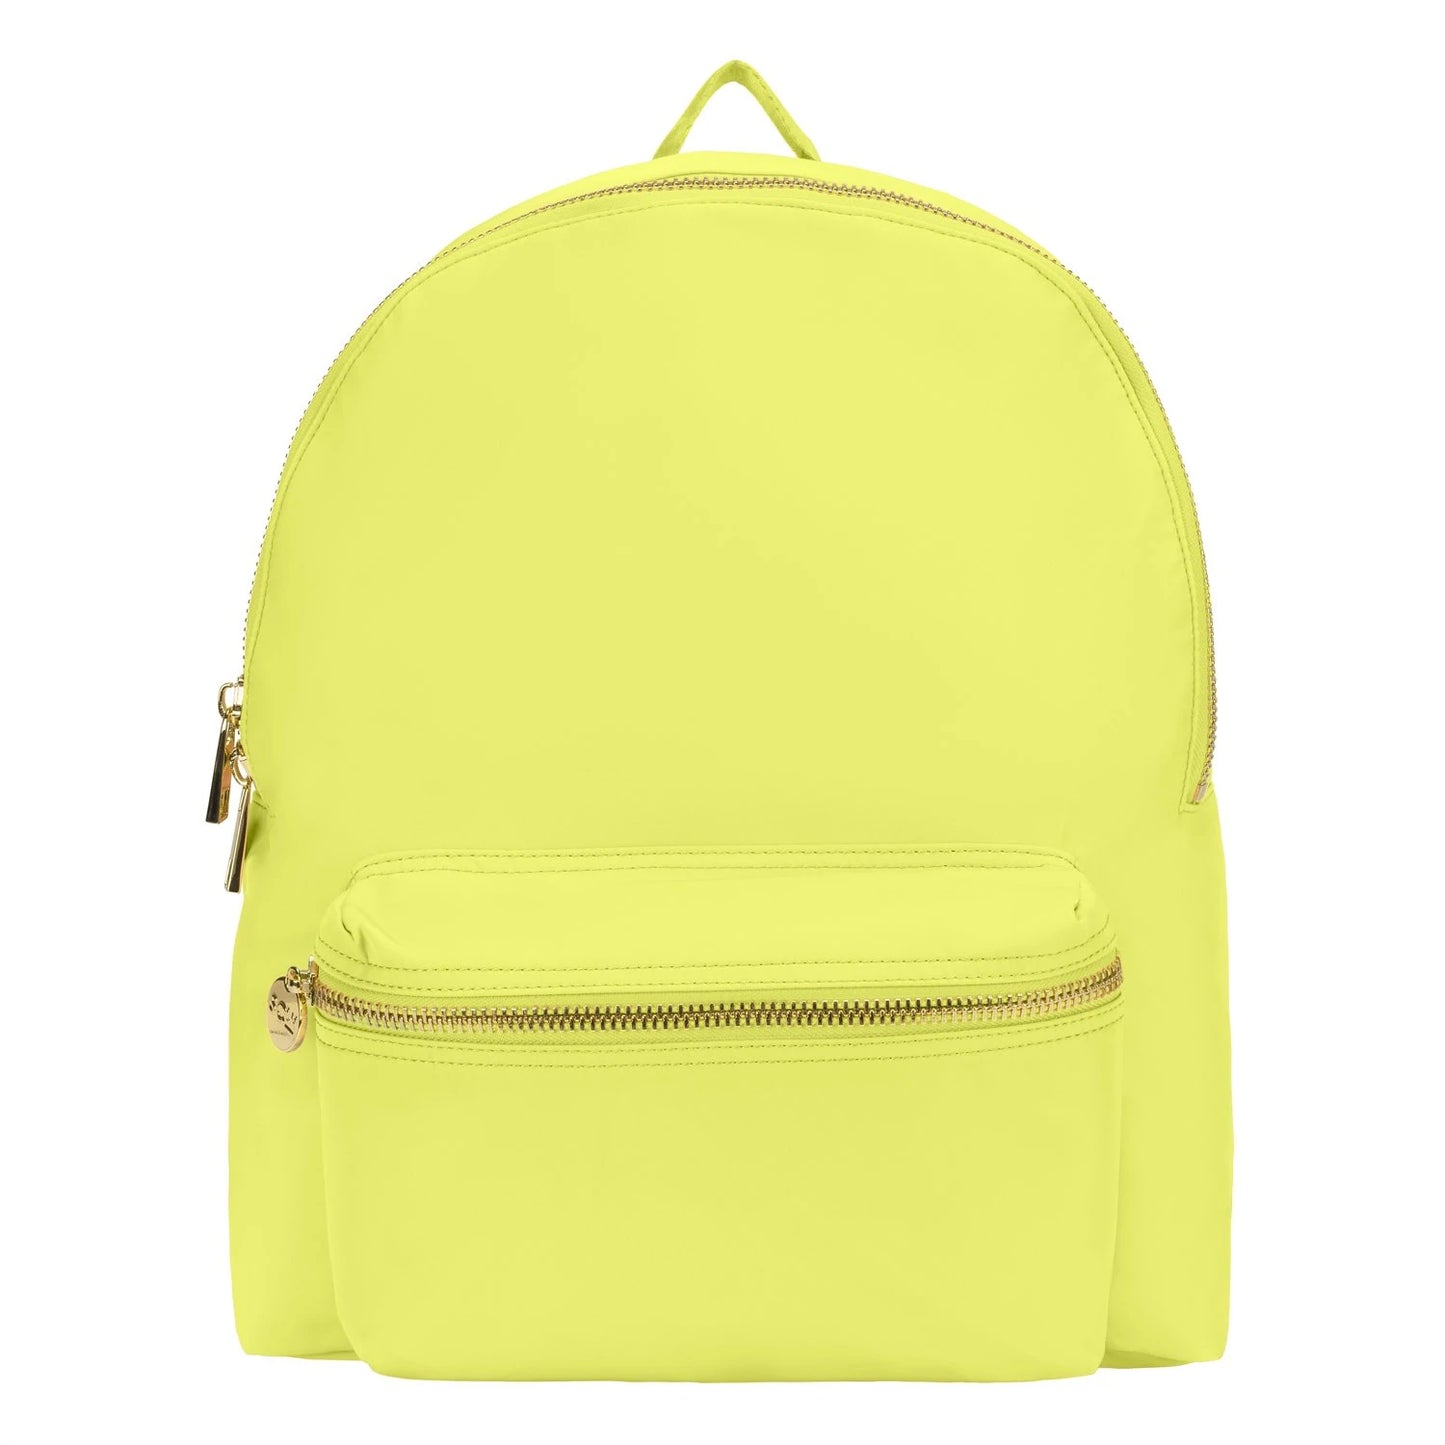 FOREVER 21 Yellow Sling Bag YELLOW Sling Bag YELLOW - Price in India |  Flipkart.com